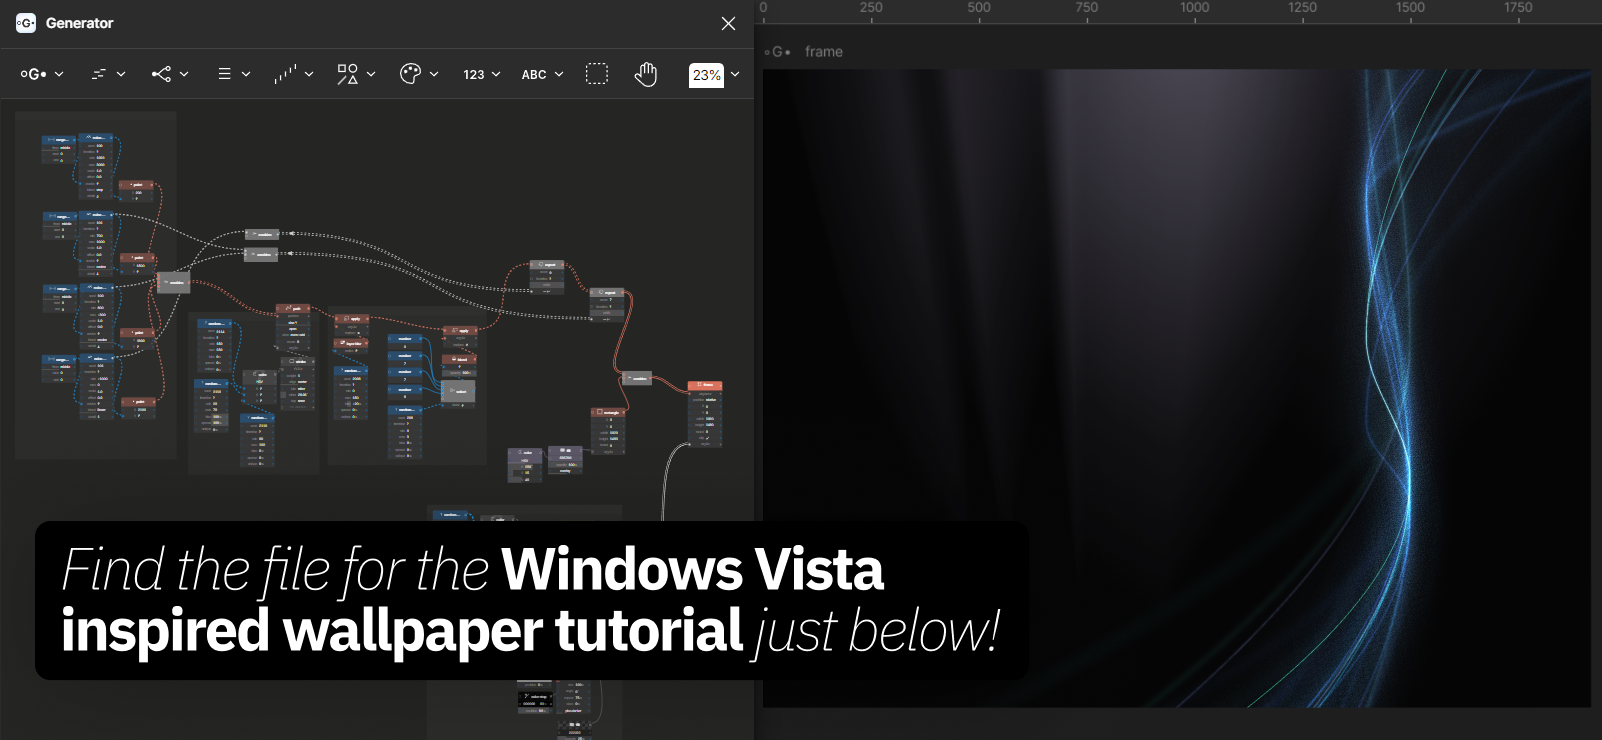 Vista tutorial file